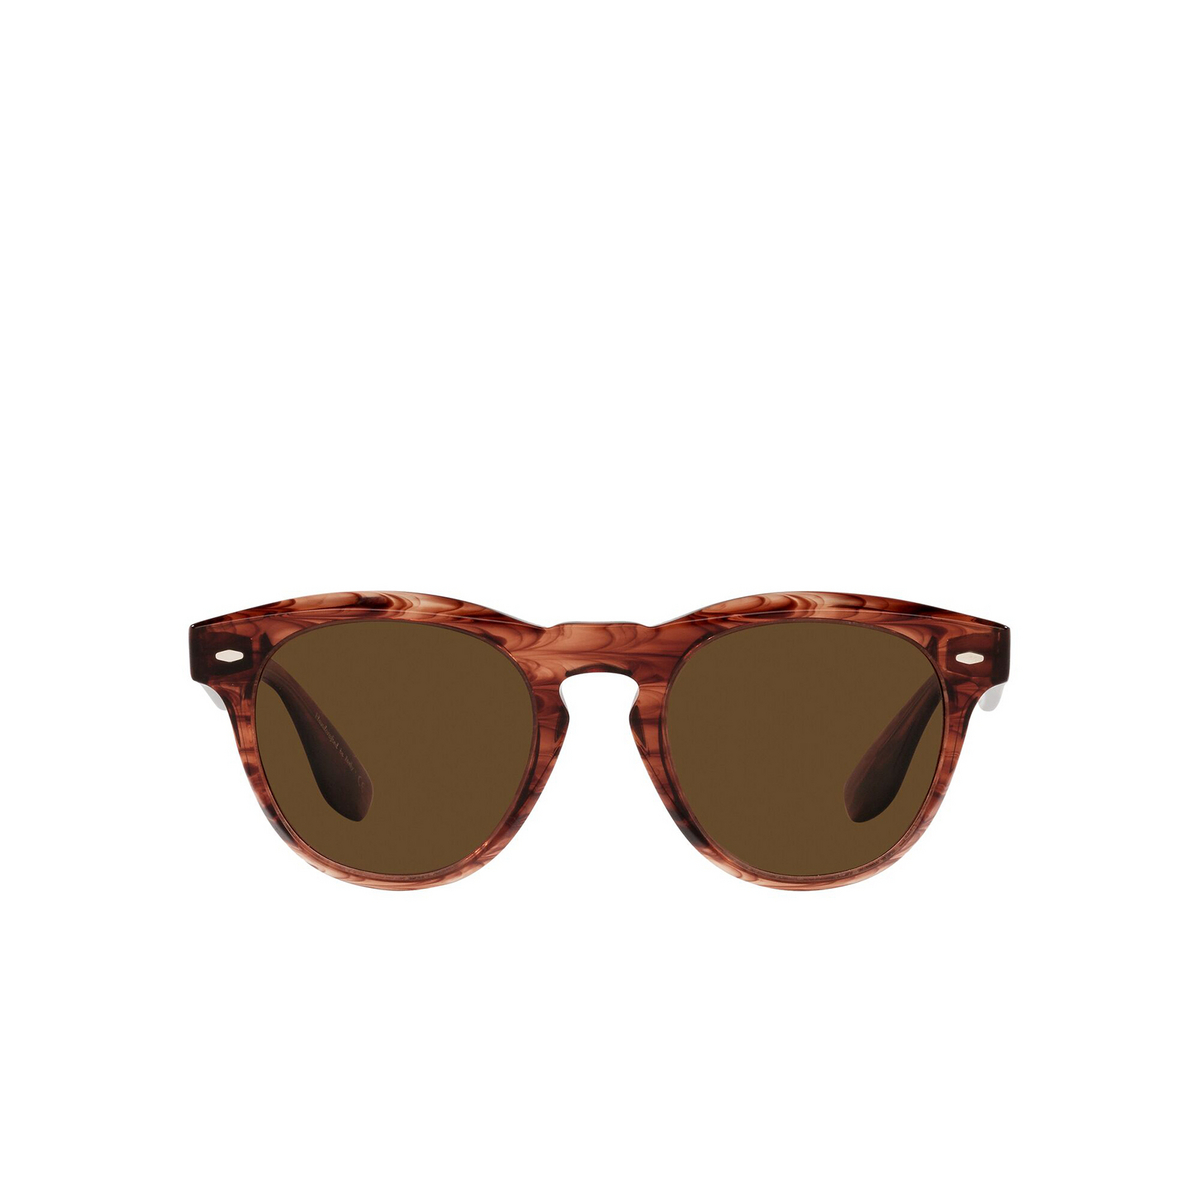 Oliver Peoples® Square Sunglasses: Nino OV5473SU color Dark Amber Tortoise 172157 - front view.